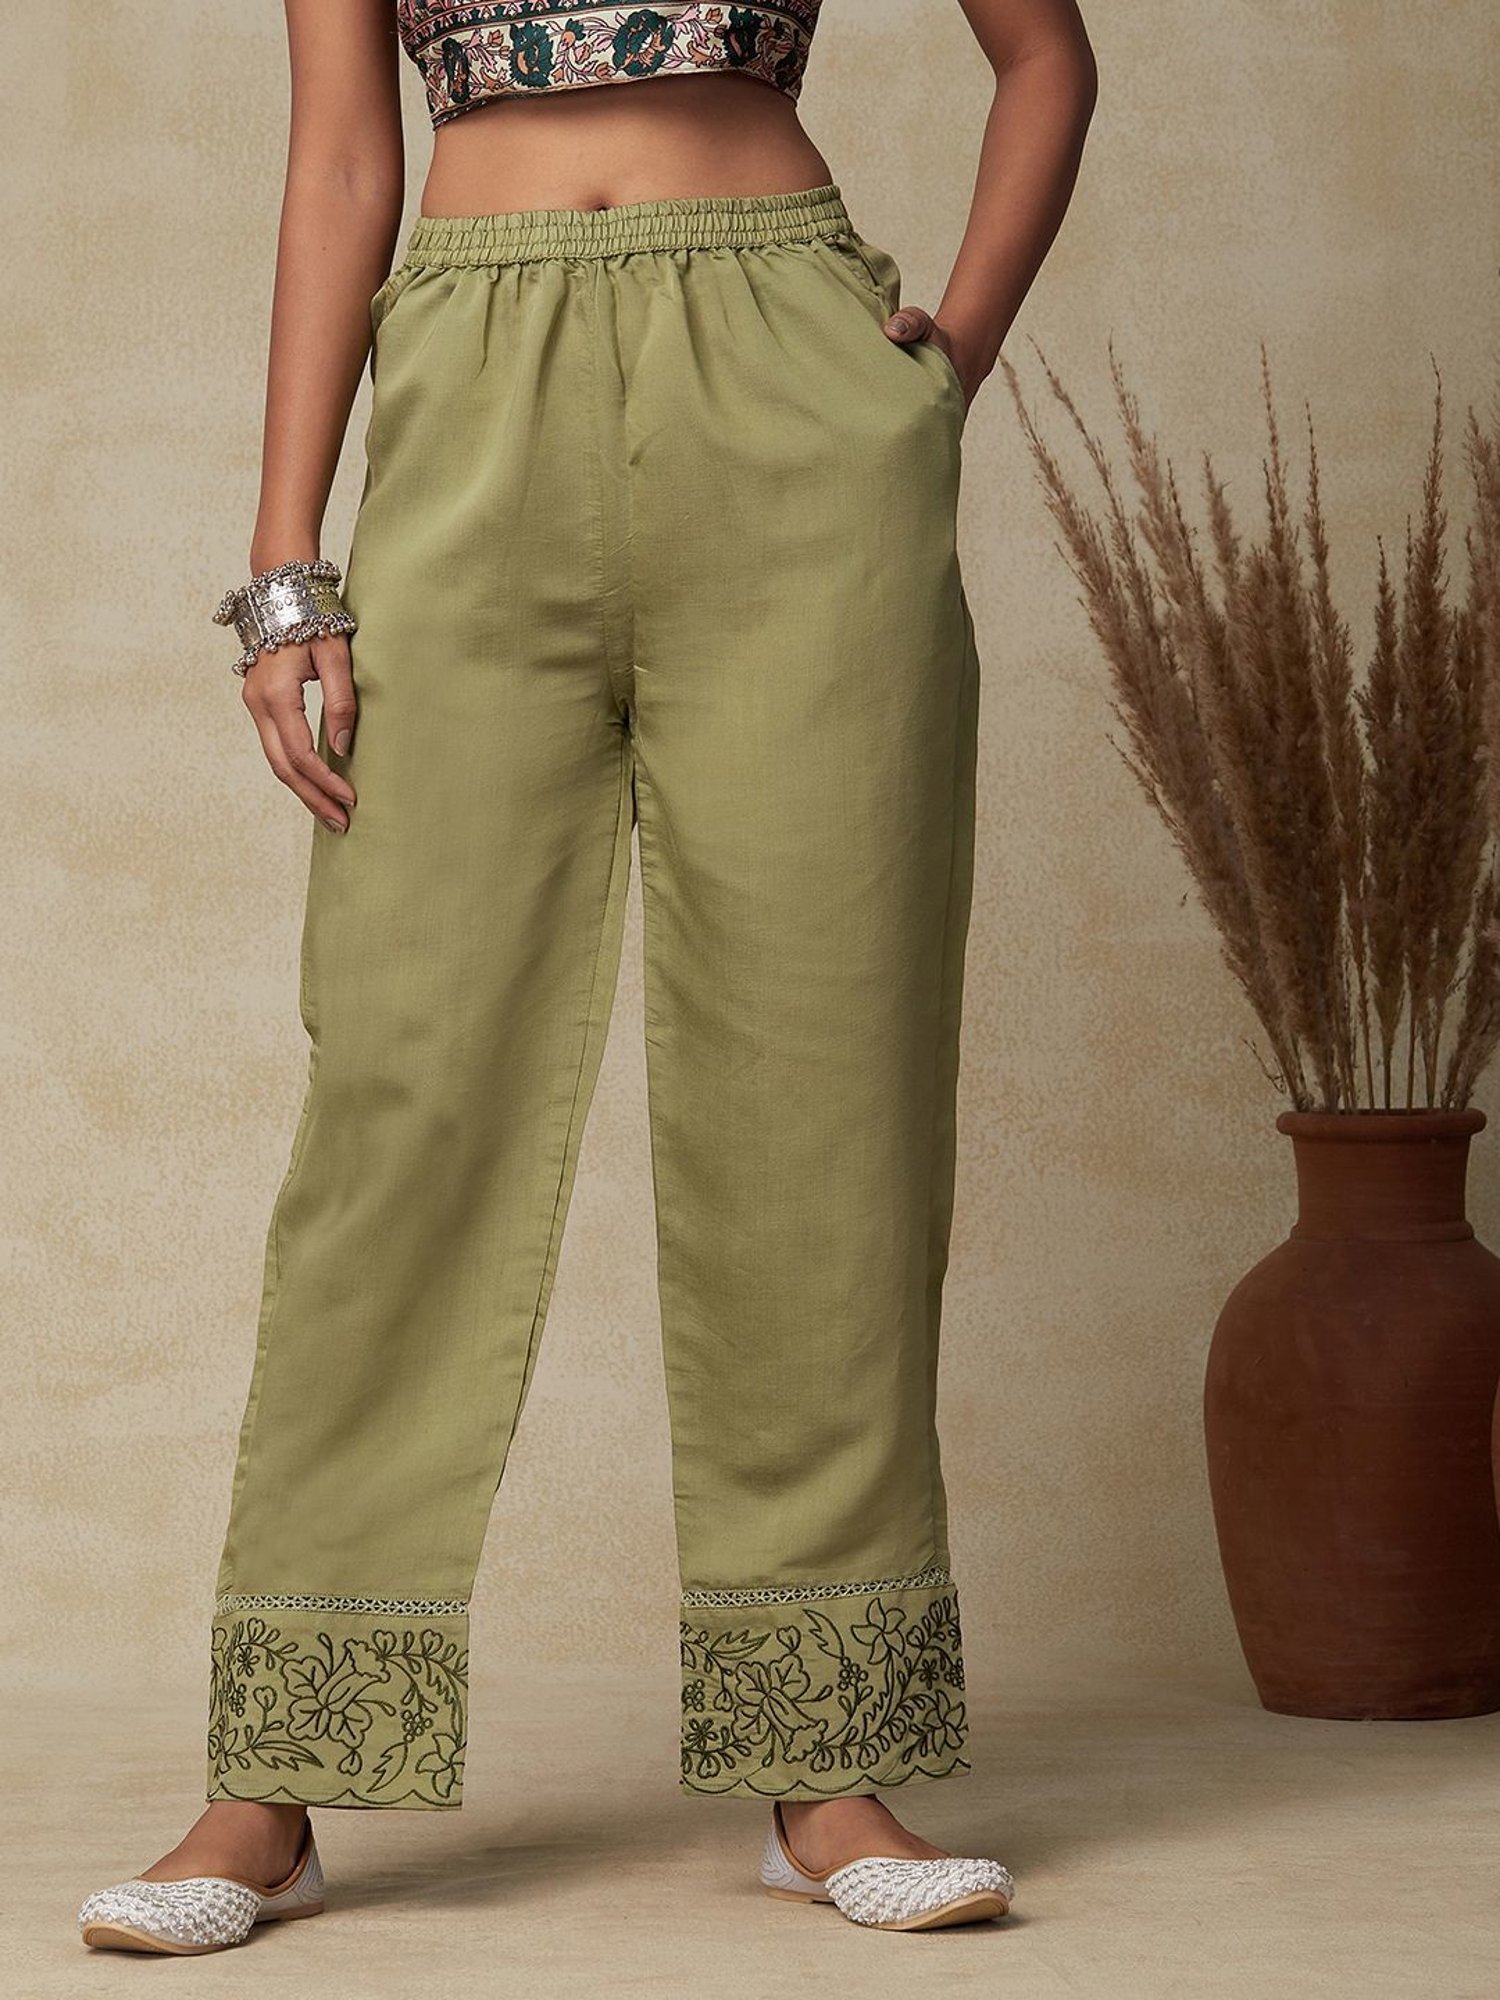 Culottes palazzo palazzo pants formal pants trends streetstyle olive  africanprint ankara | Grønn